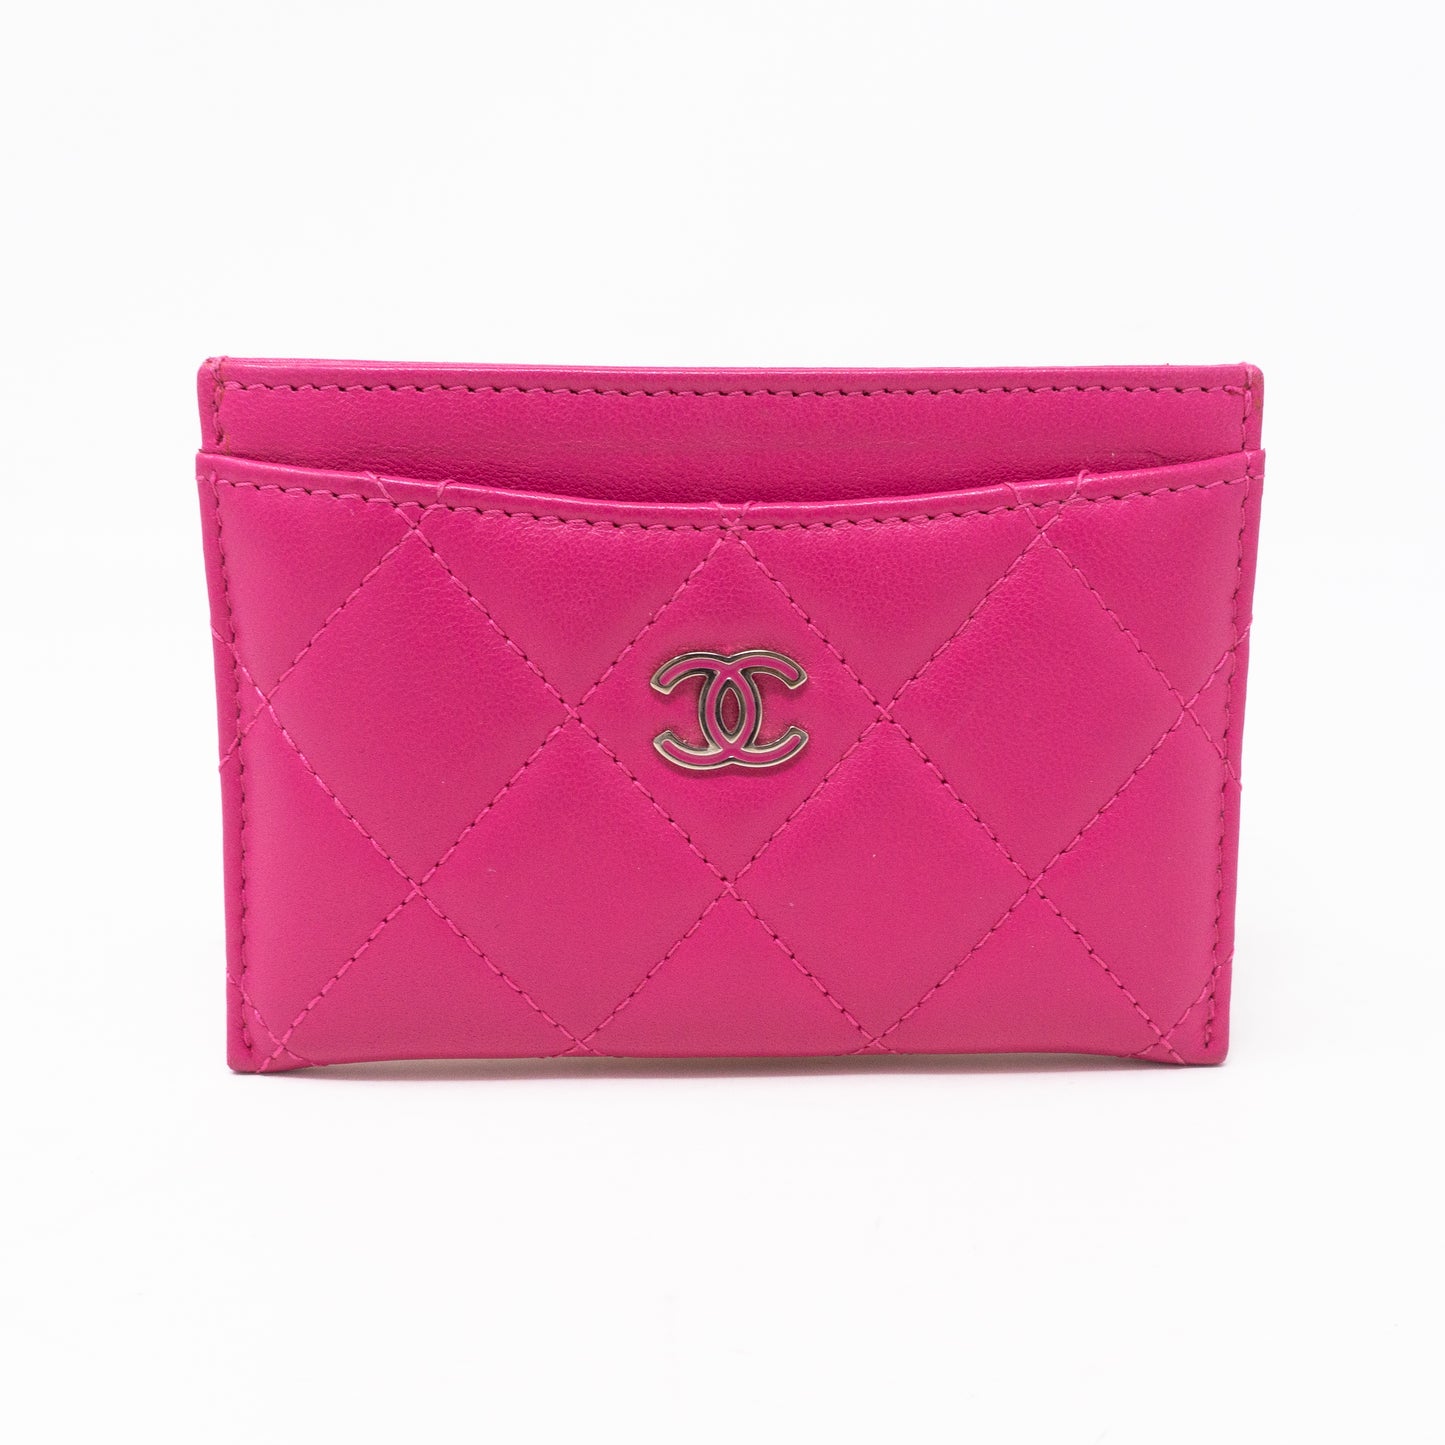 Card Holder Pink Leather